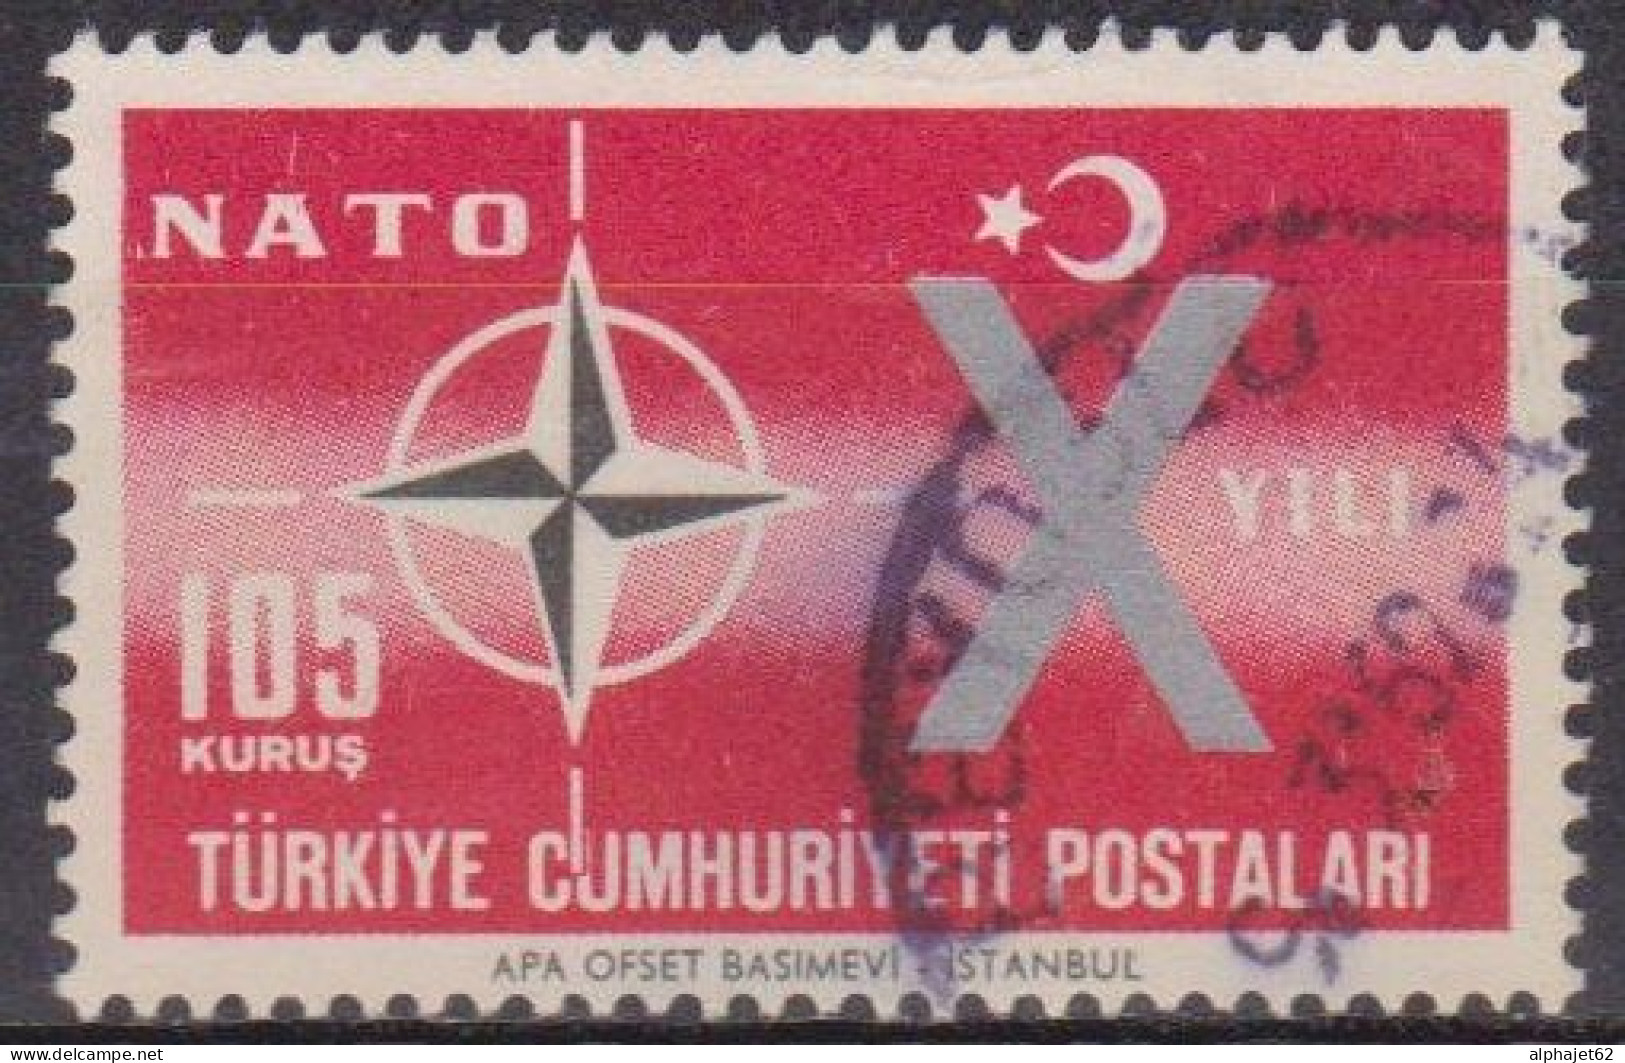 1962 - TURQUIE - 10° Anniversaire De L'OTAN - N° 1615 - Gebraucht